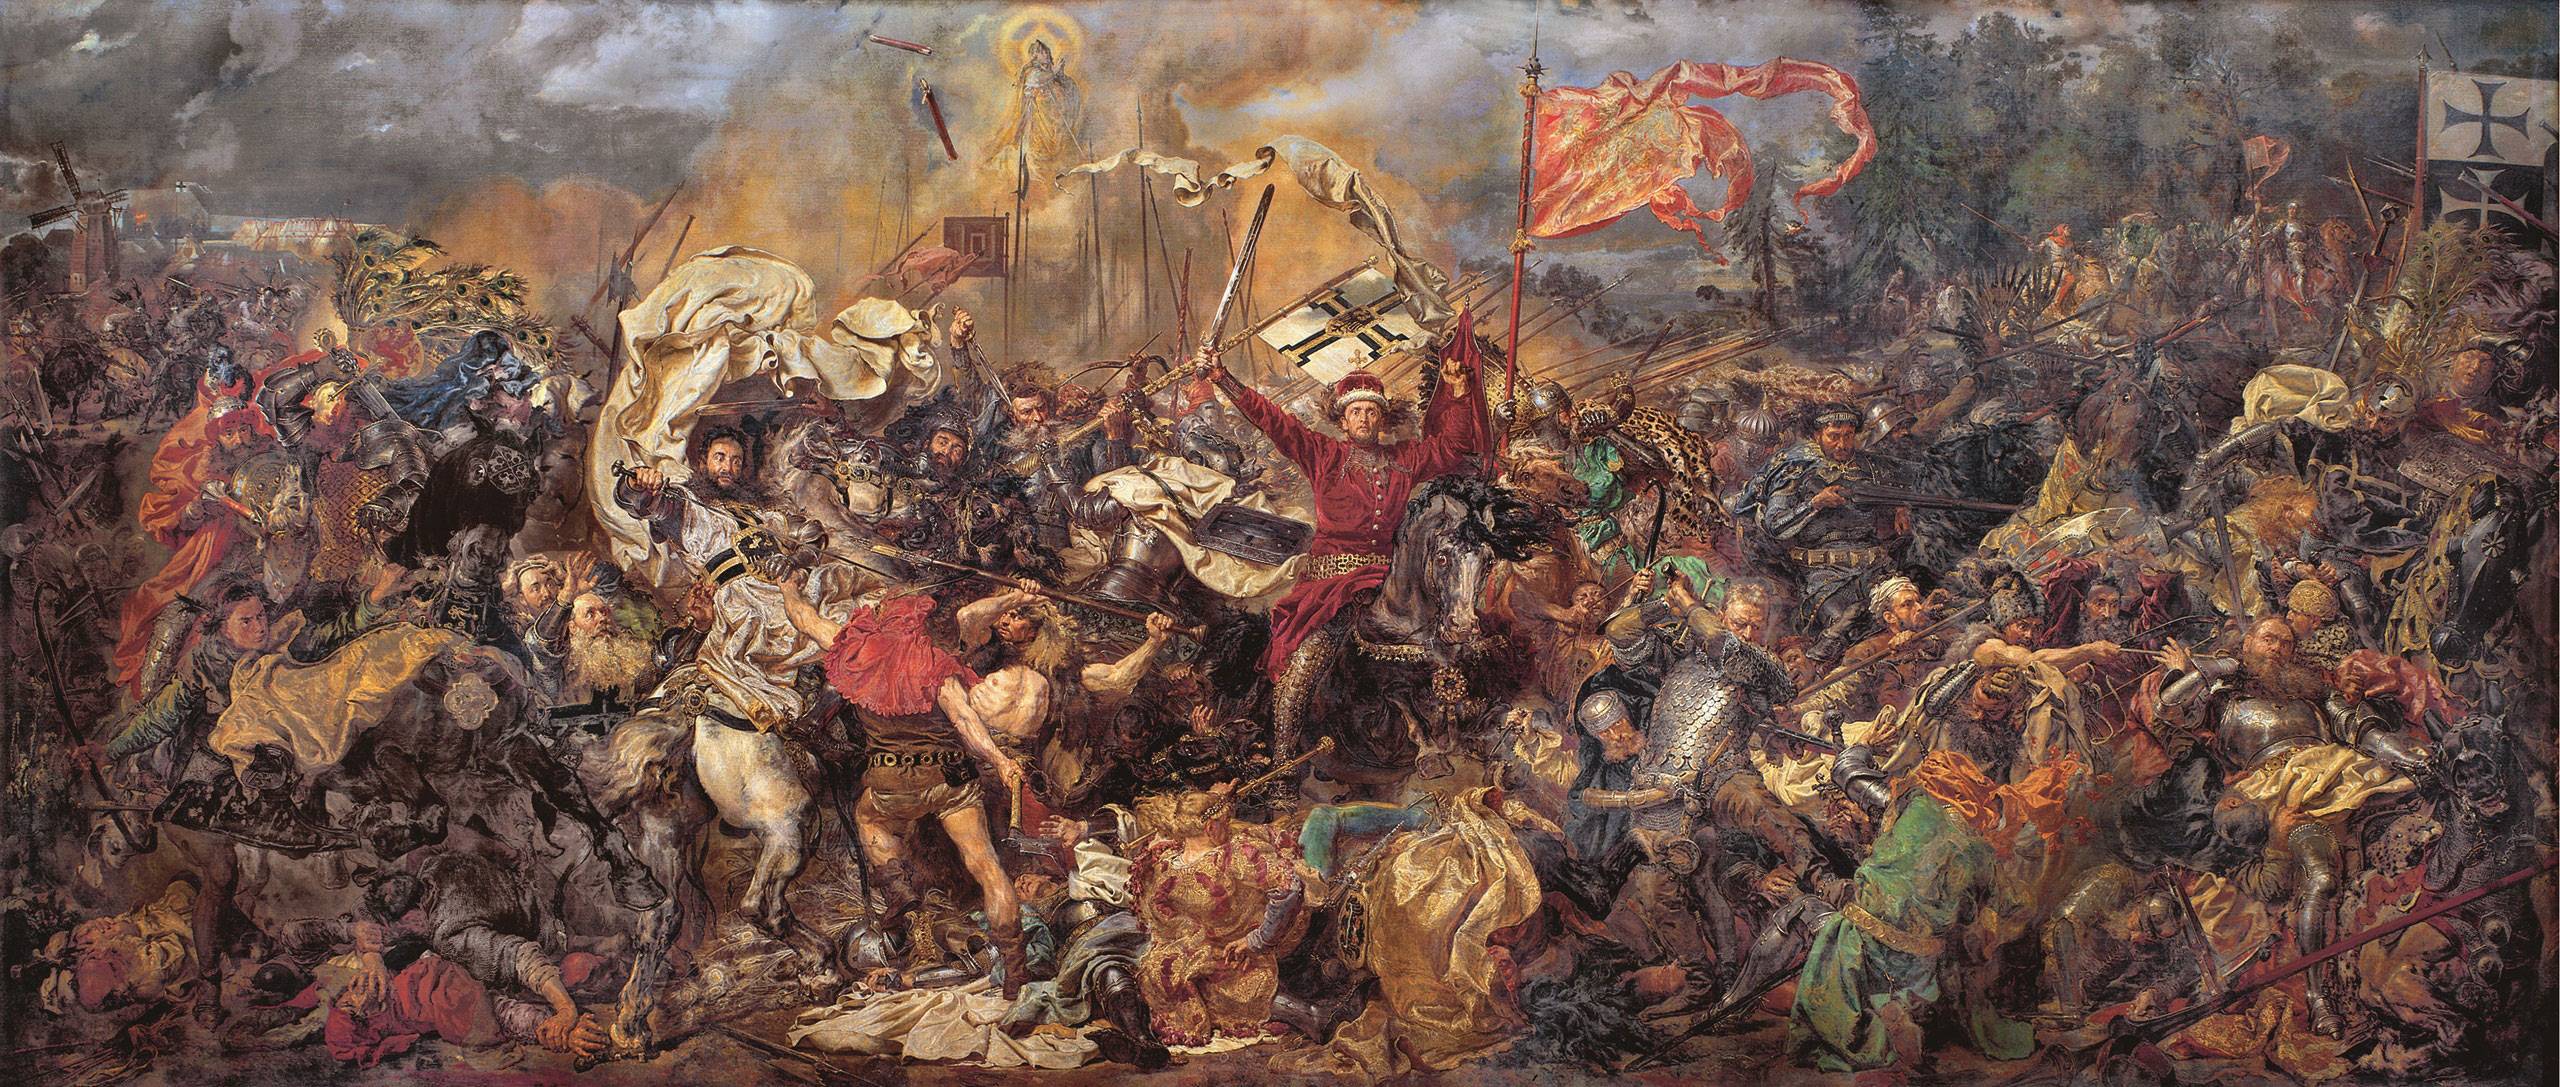 Battle Of Grunwald HD Wallpaper Background Image